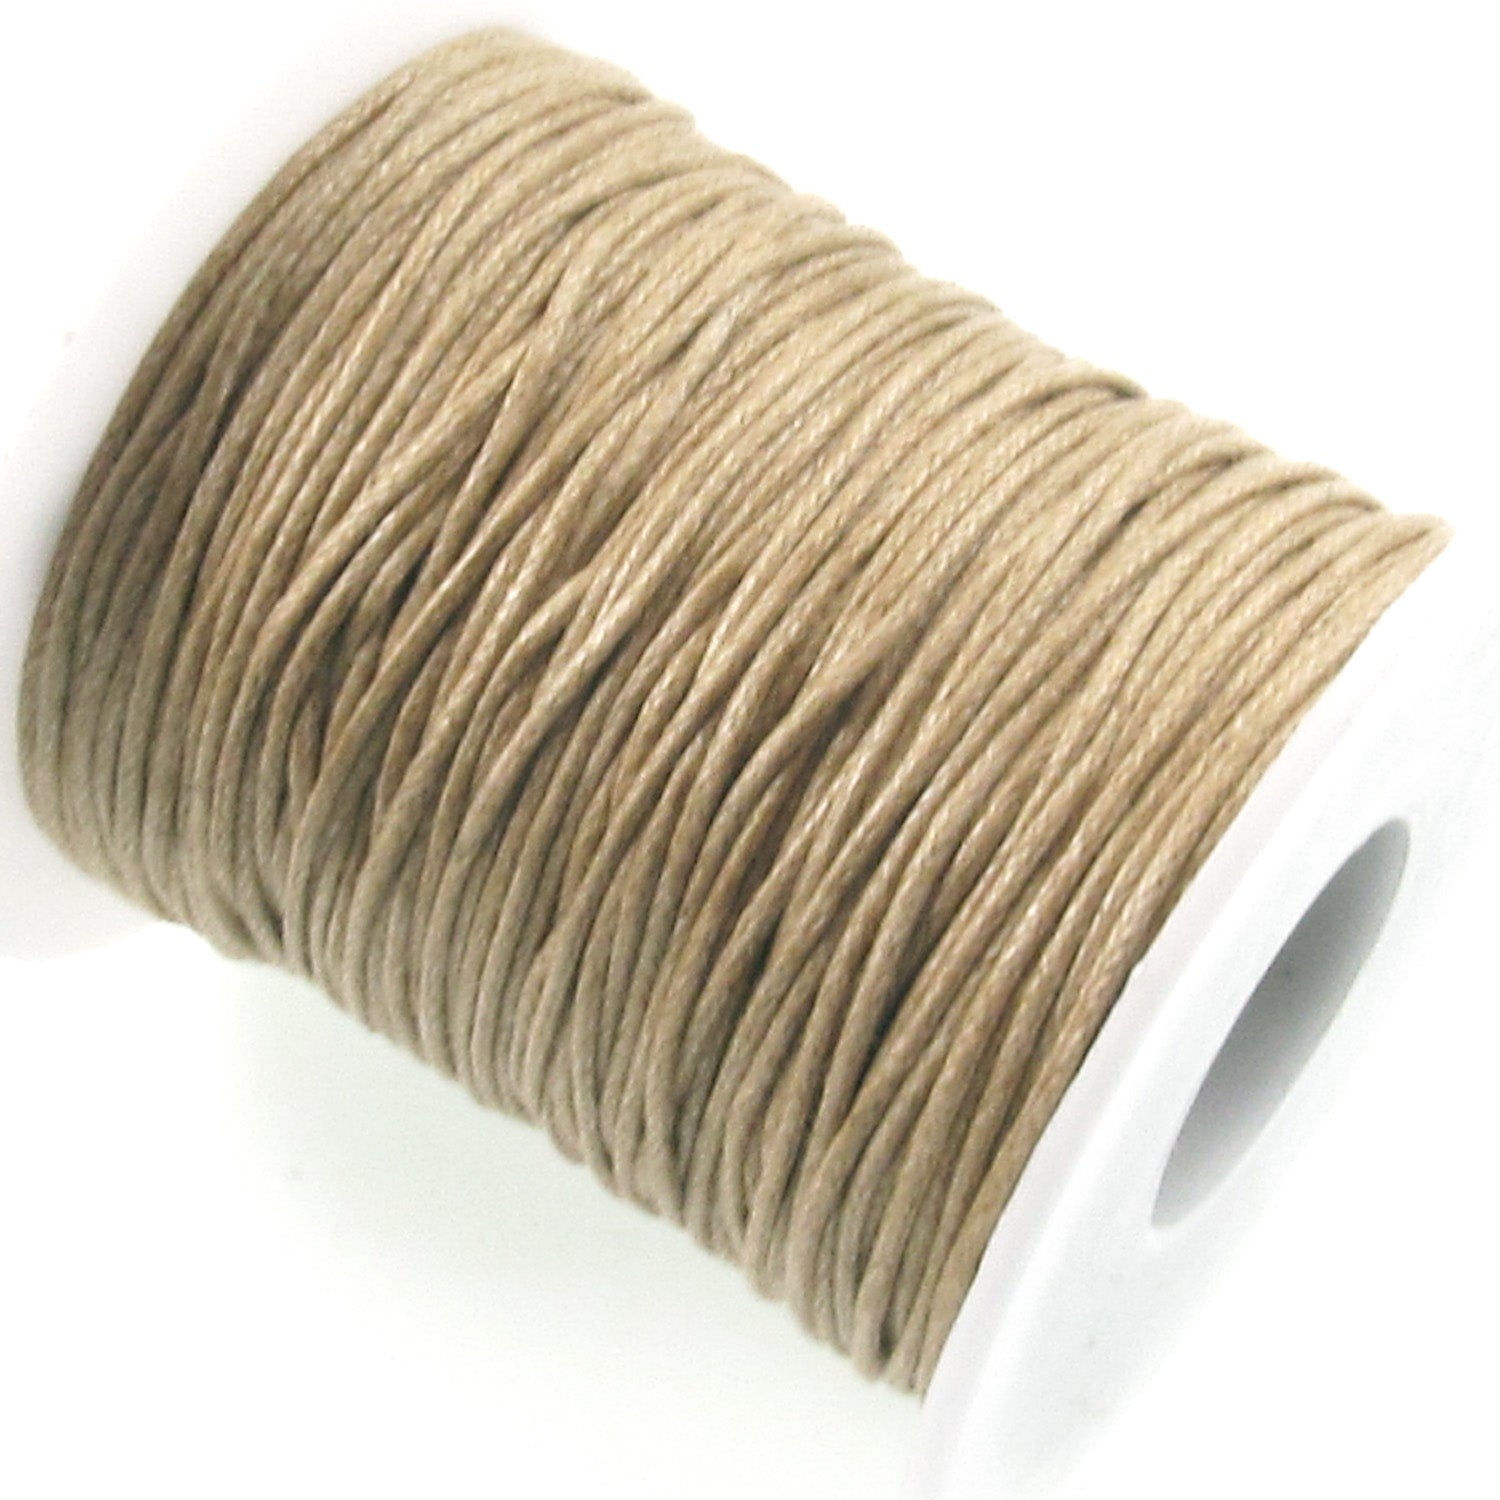 1MM Wax Cotton Cord & Stringing Material, Natural/Tan Color